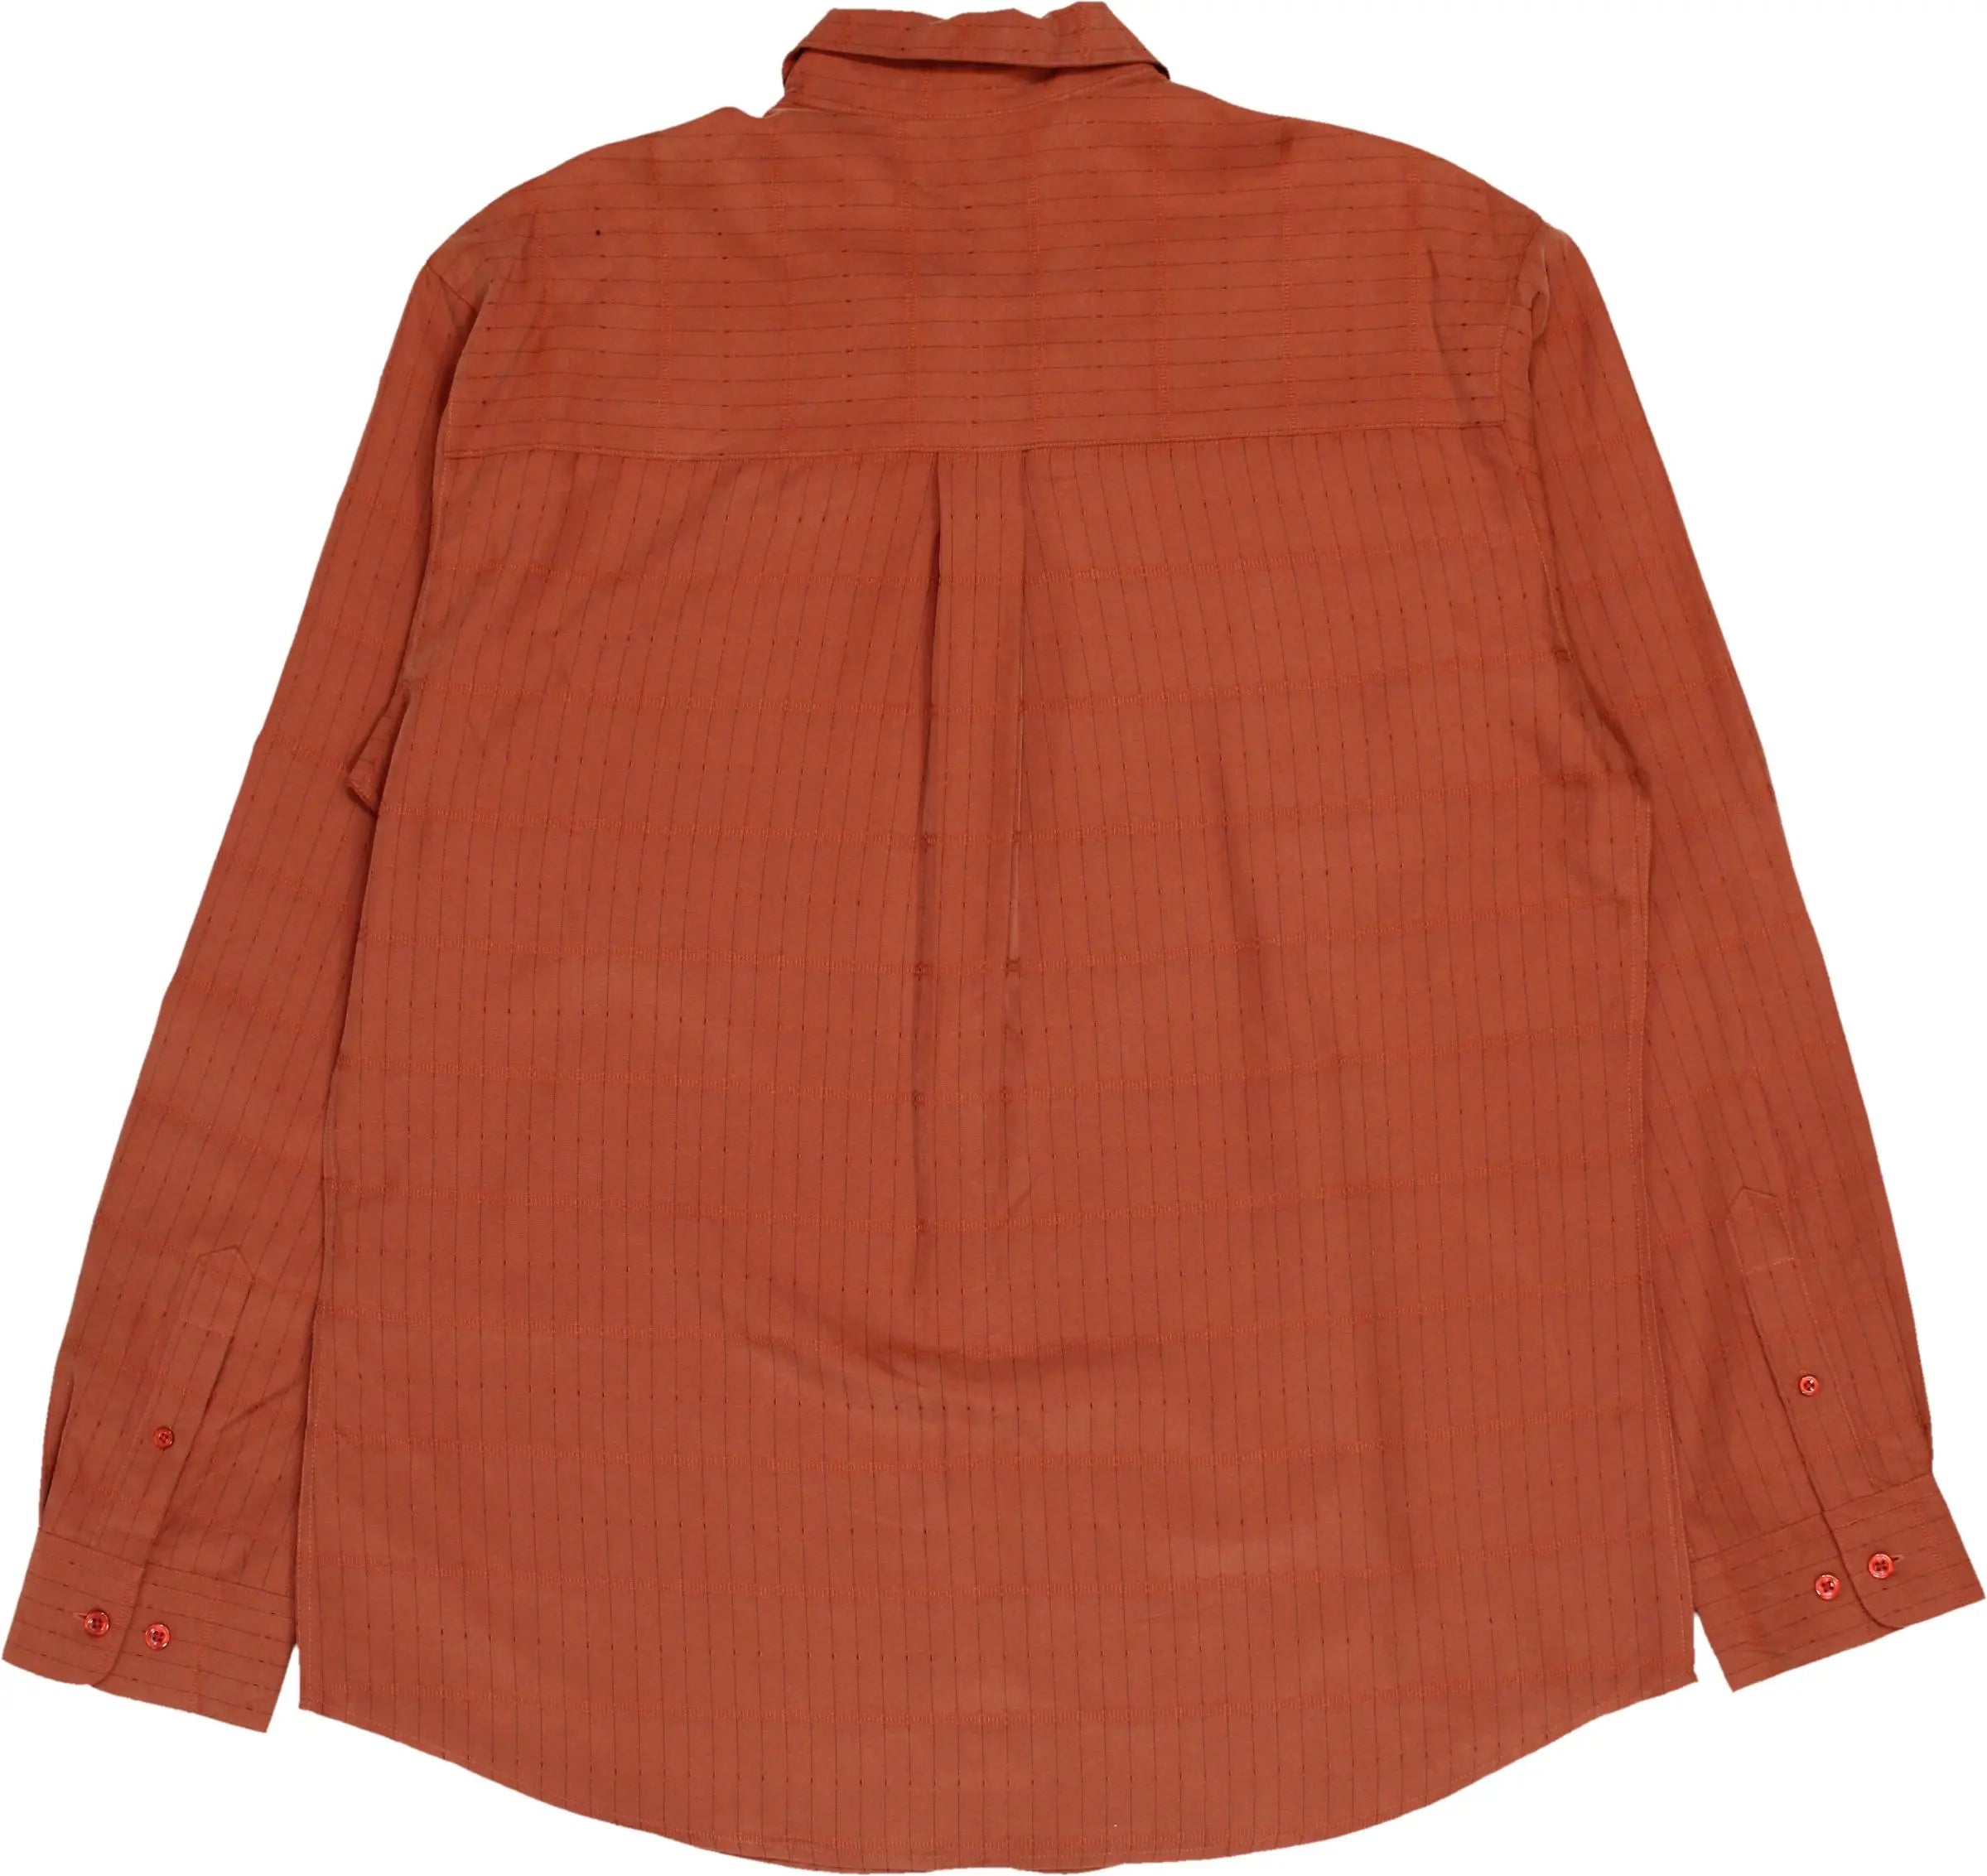 Enterprise - Striped Shirt- ThriftTale.com - Vintage and second handclothing